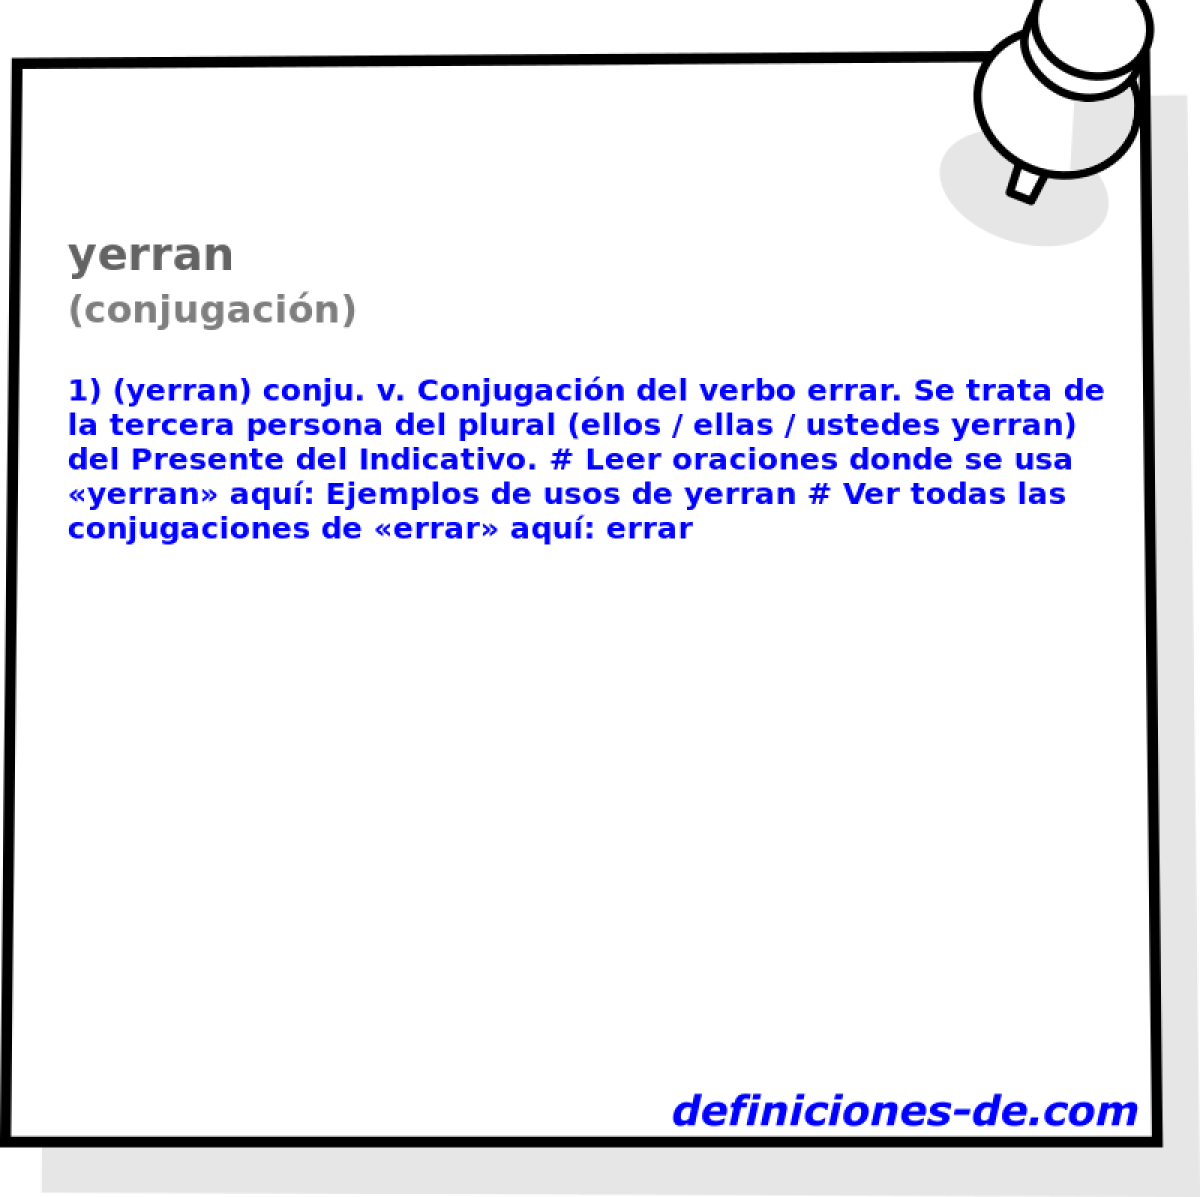 yerran (conjugacin)